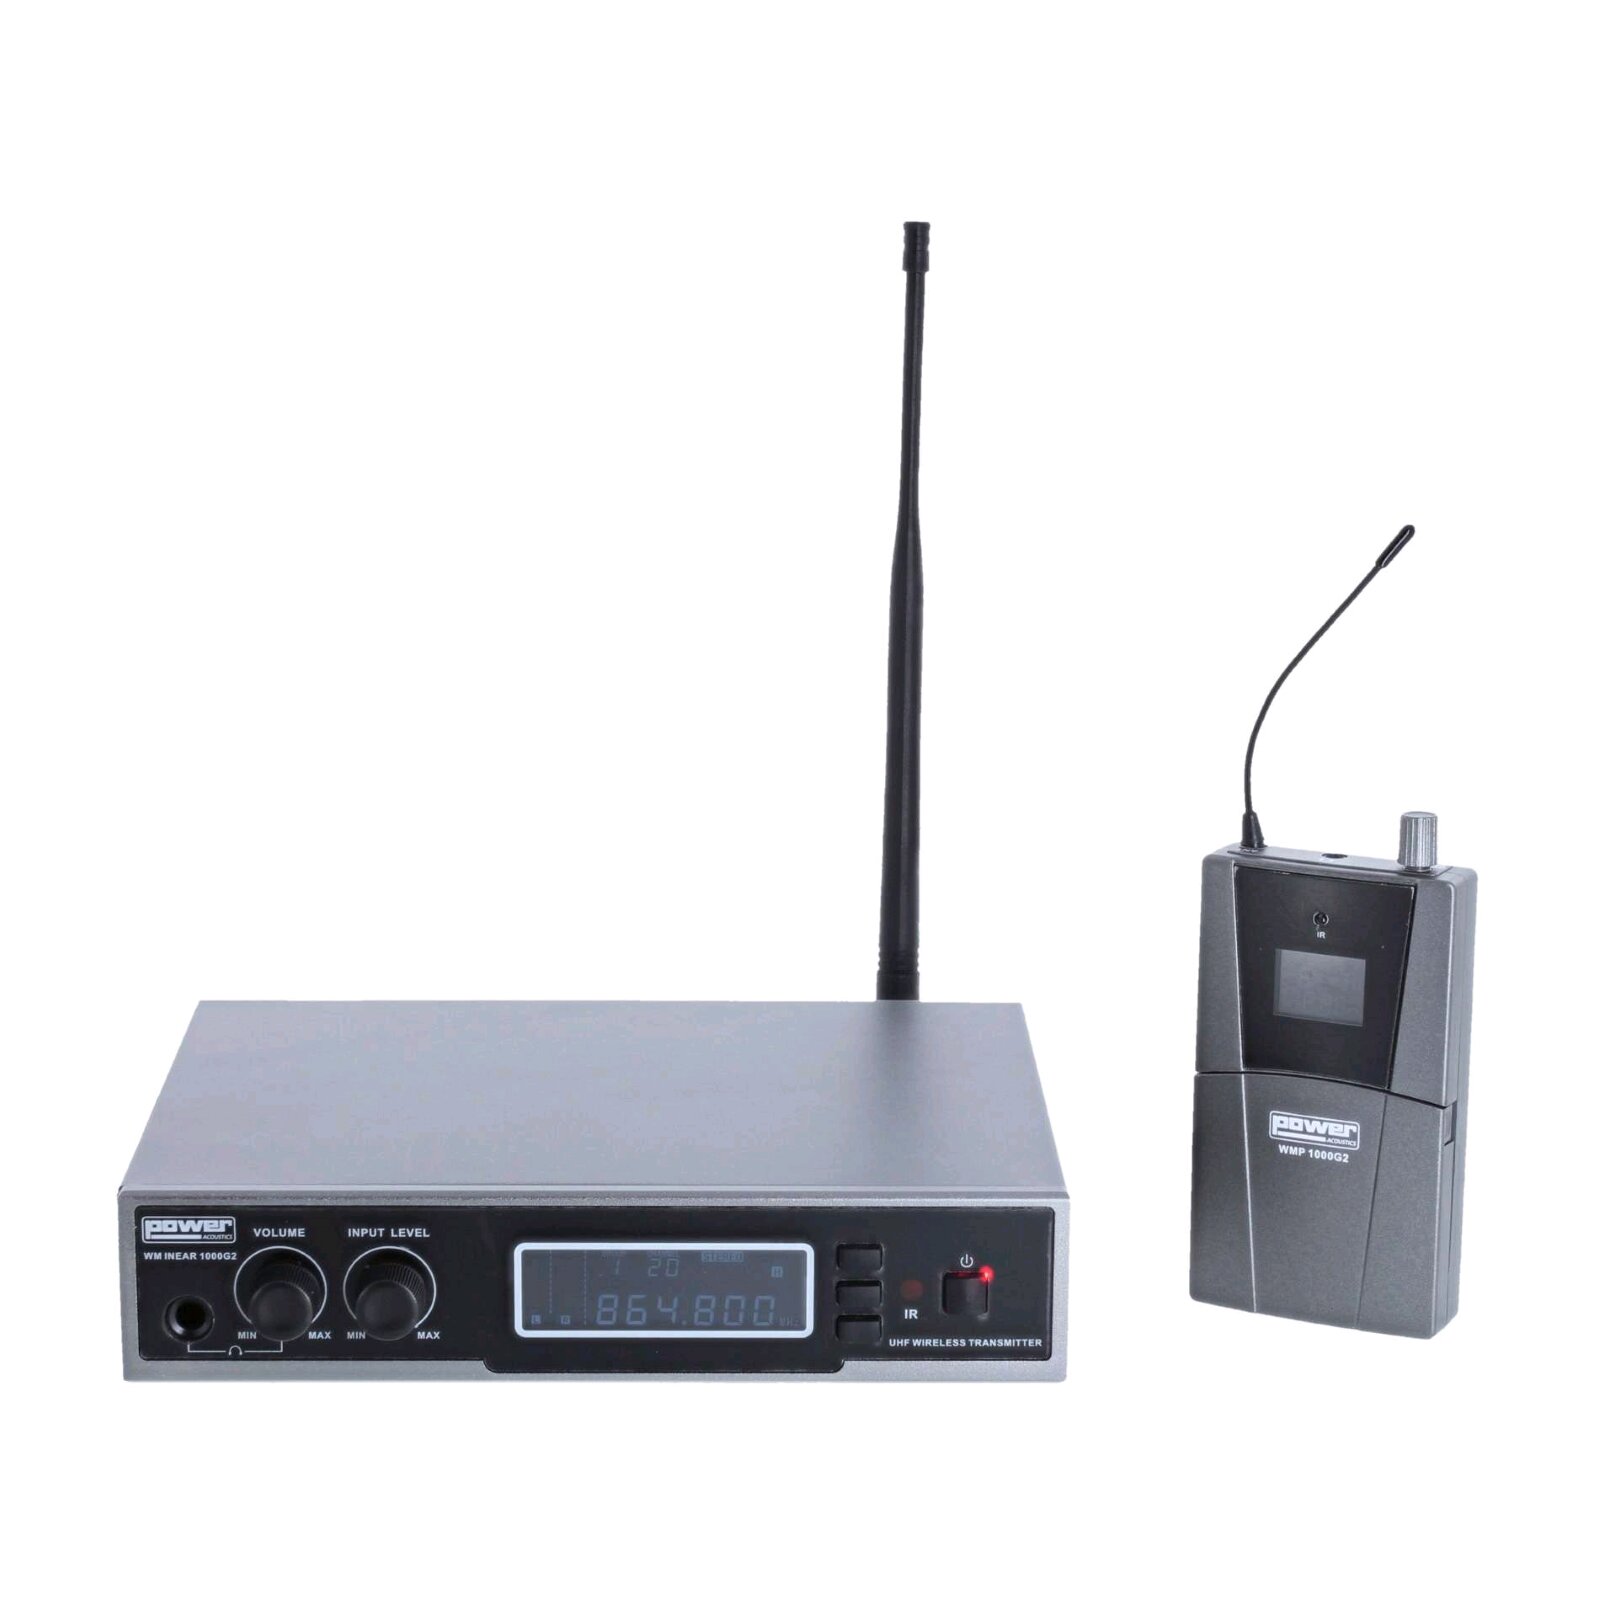 Power Acoustics WM INEAR 1000 G2 Drahtloses Di-Ear-Monitoring-System 863-865 MHz : photo 1